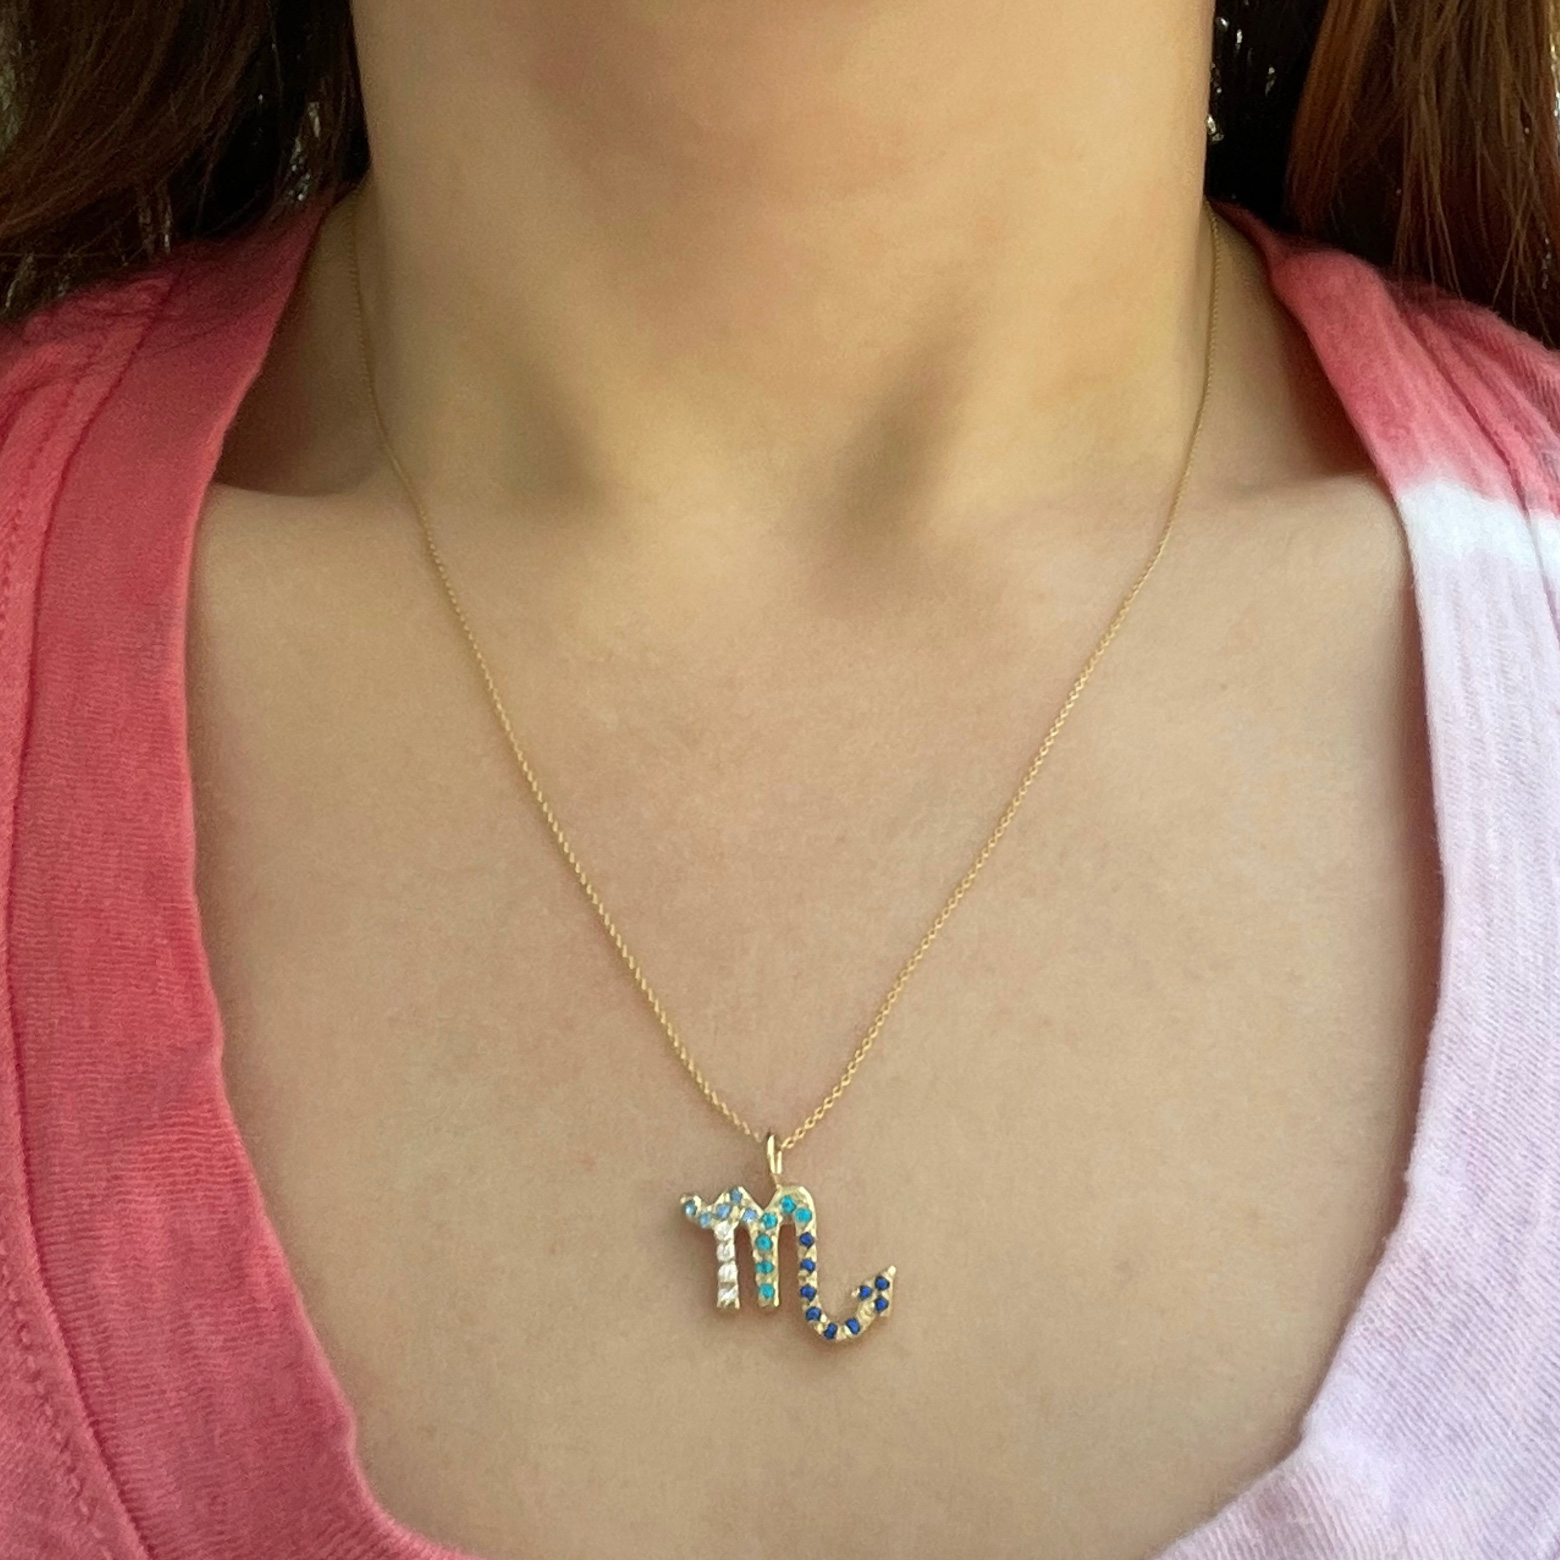 Scorpio zodiac sign charm pendant necklace